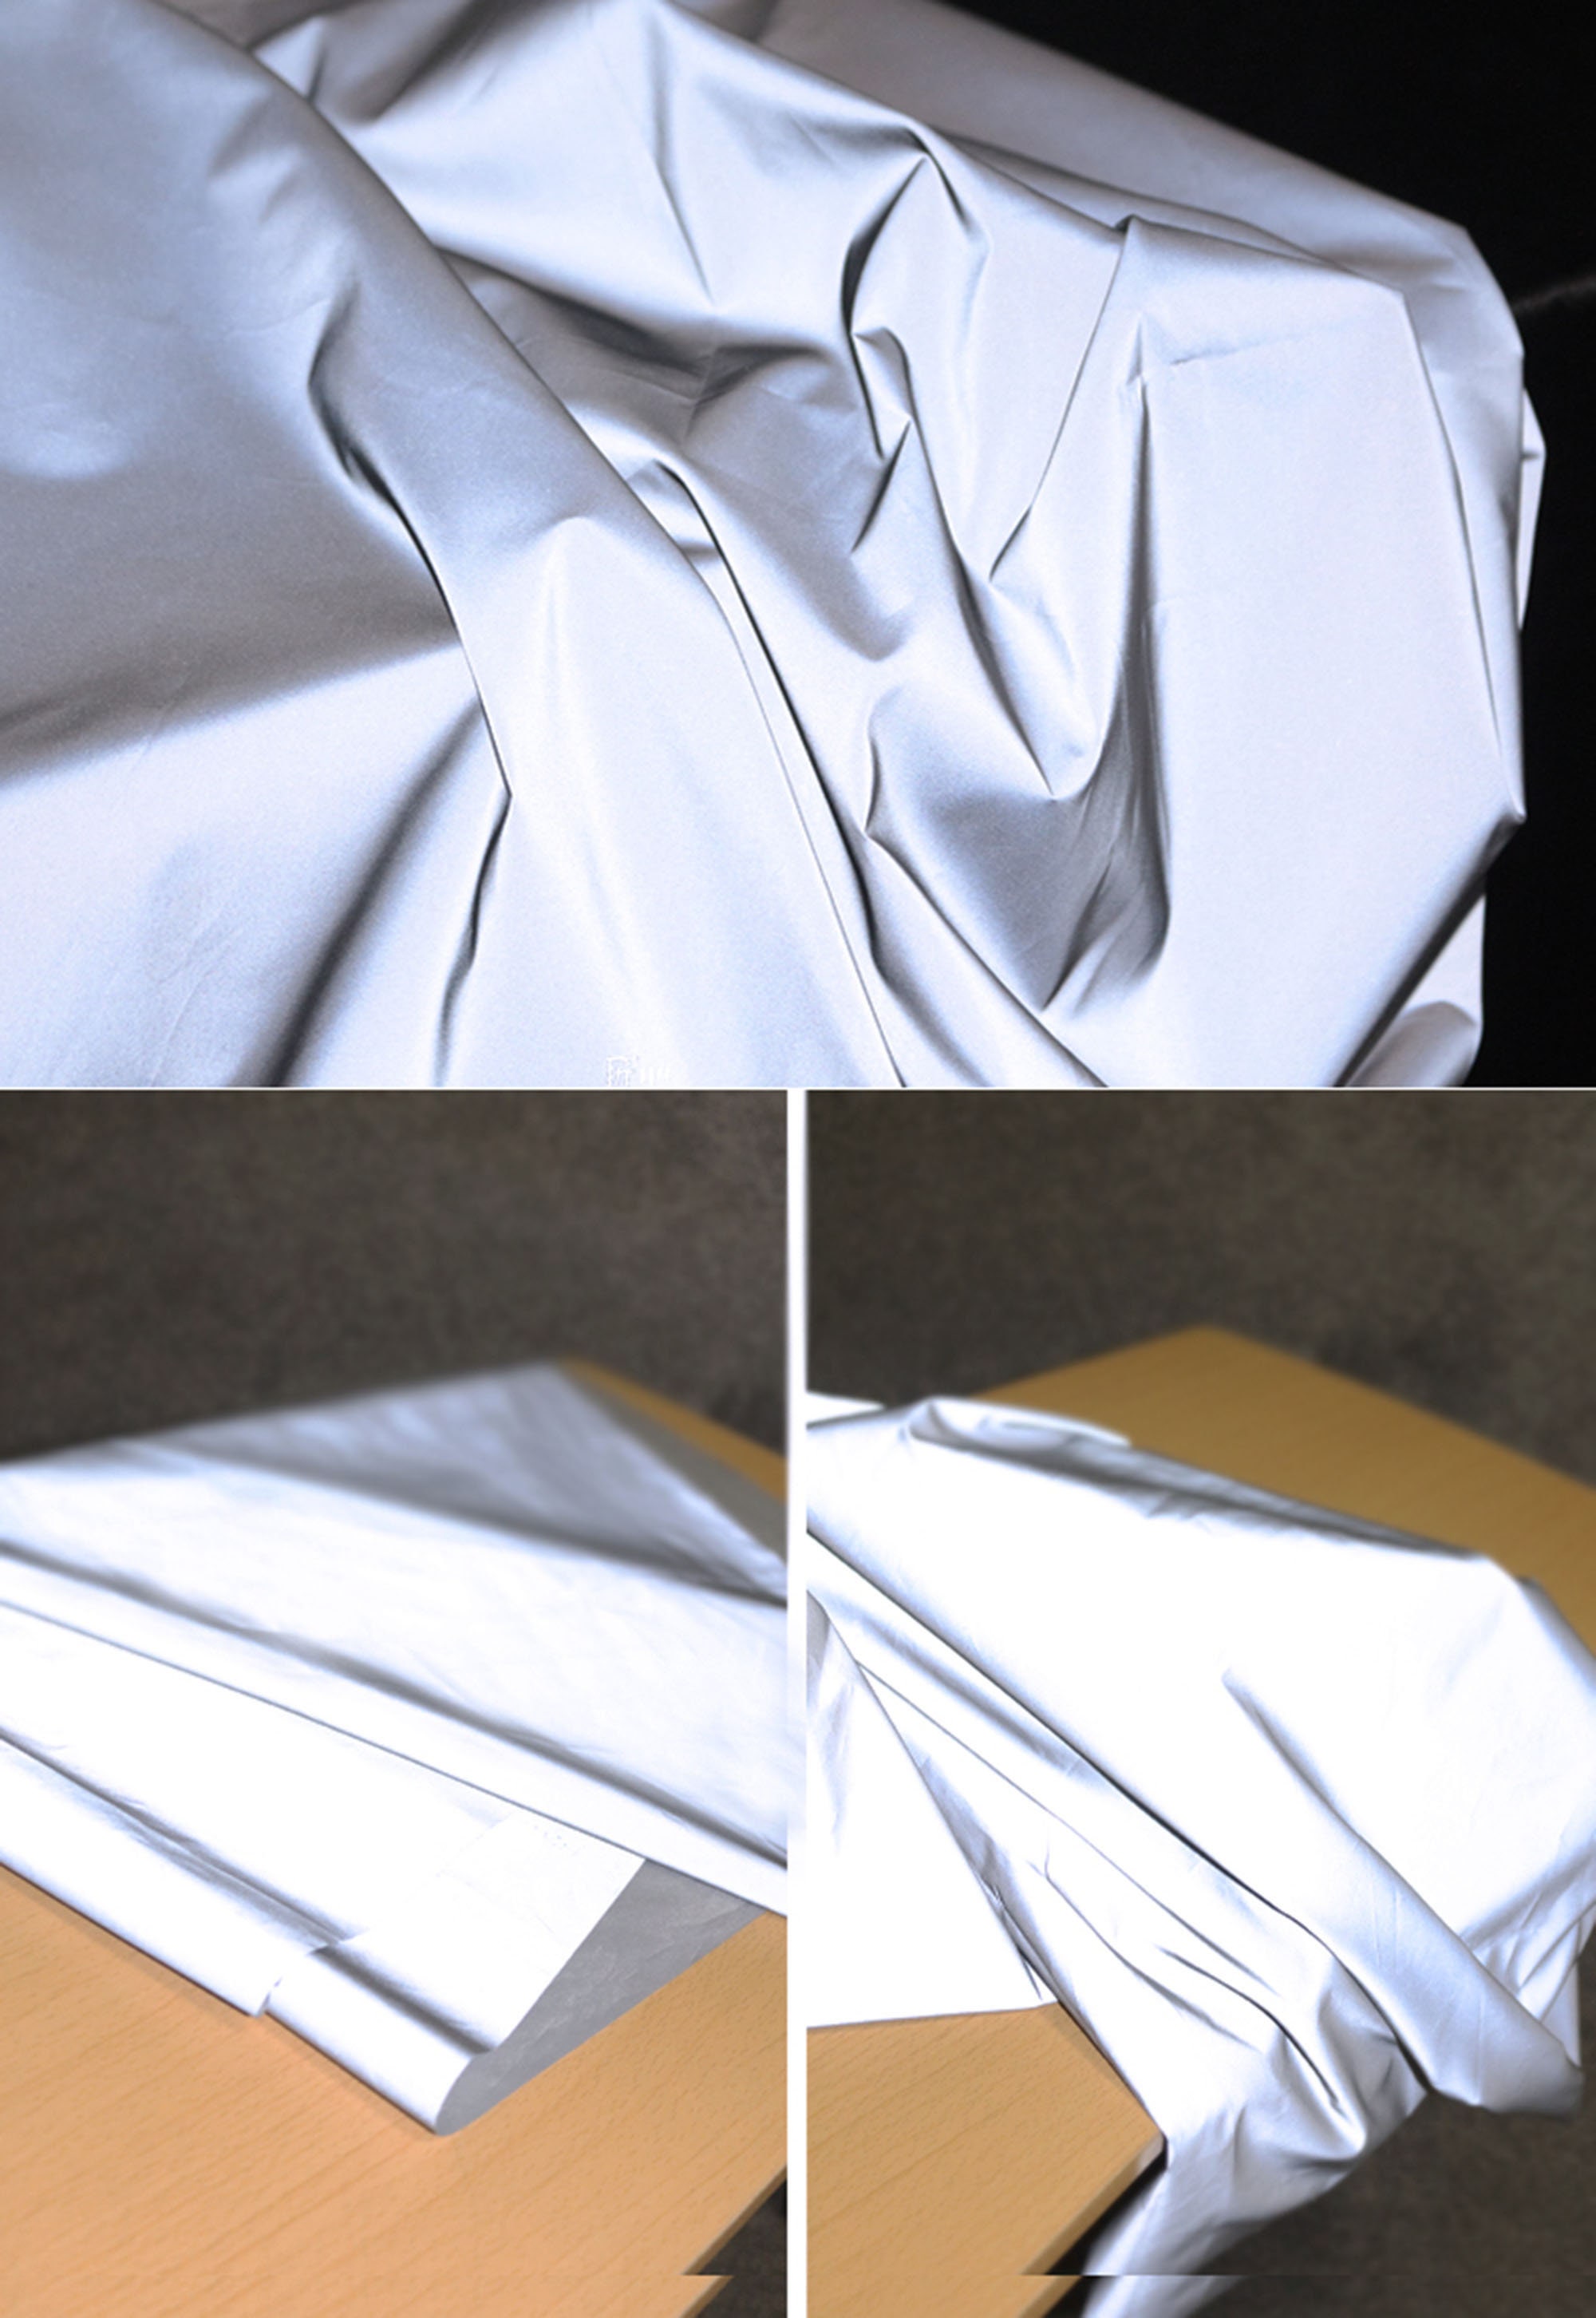 White Reflective Fabric